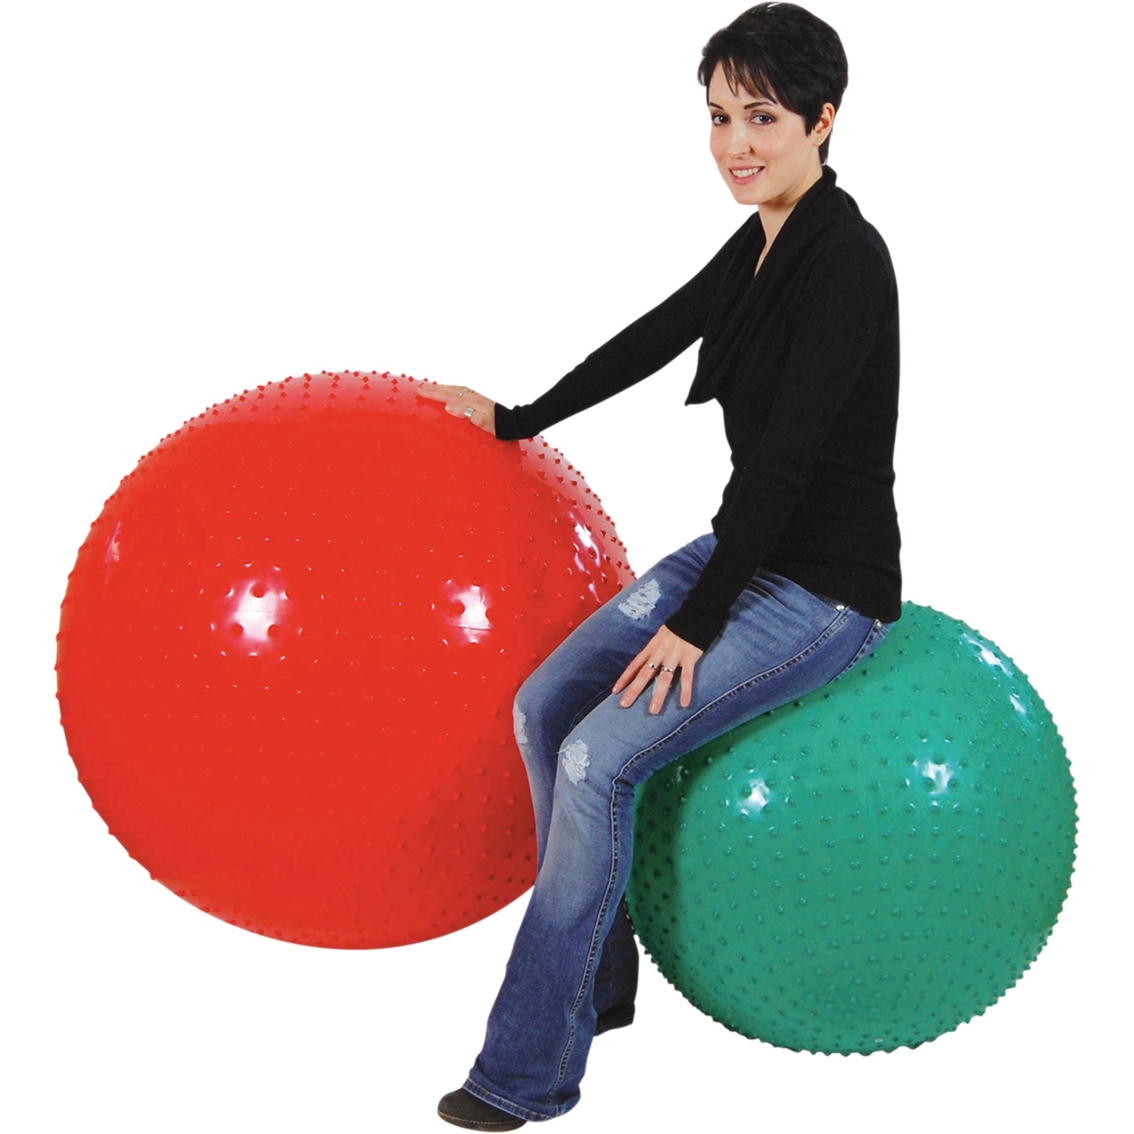 Kettler Gymnic Therasensory Ball - Image 2 of 2